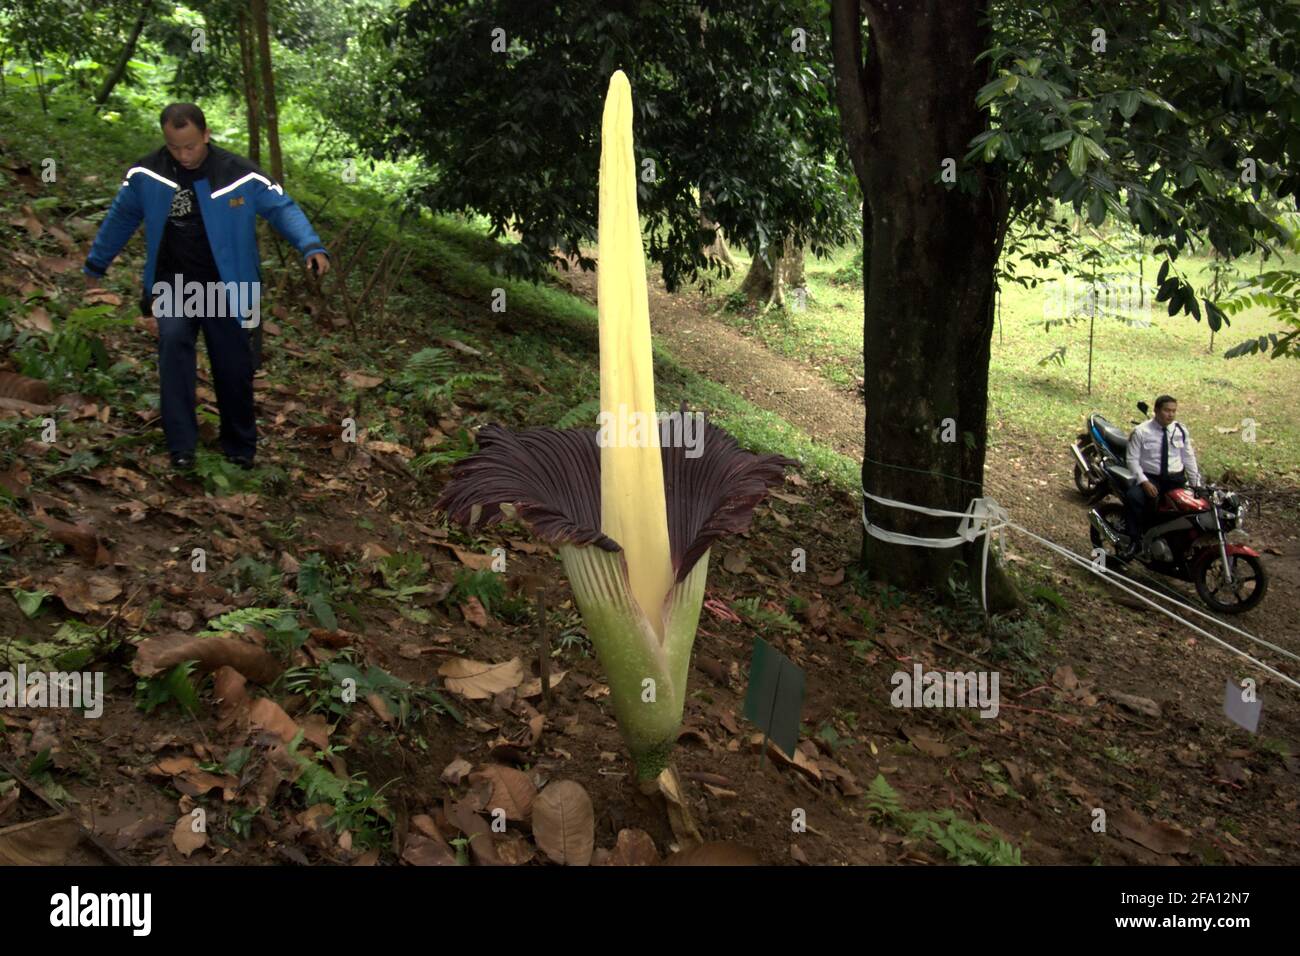 L'arum di Titan (Amorphophallus titanum) di origine sudafricana sta fiorendo ai giardini botanici di Bogor, Bogor, Giava Occidentale, Indonesia. Foto Stock